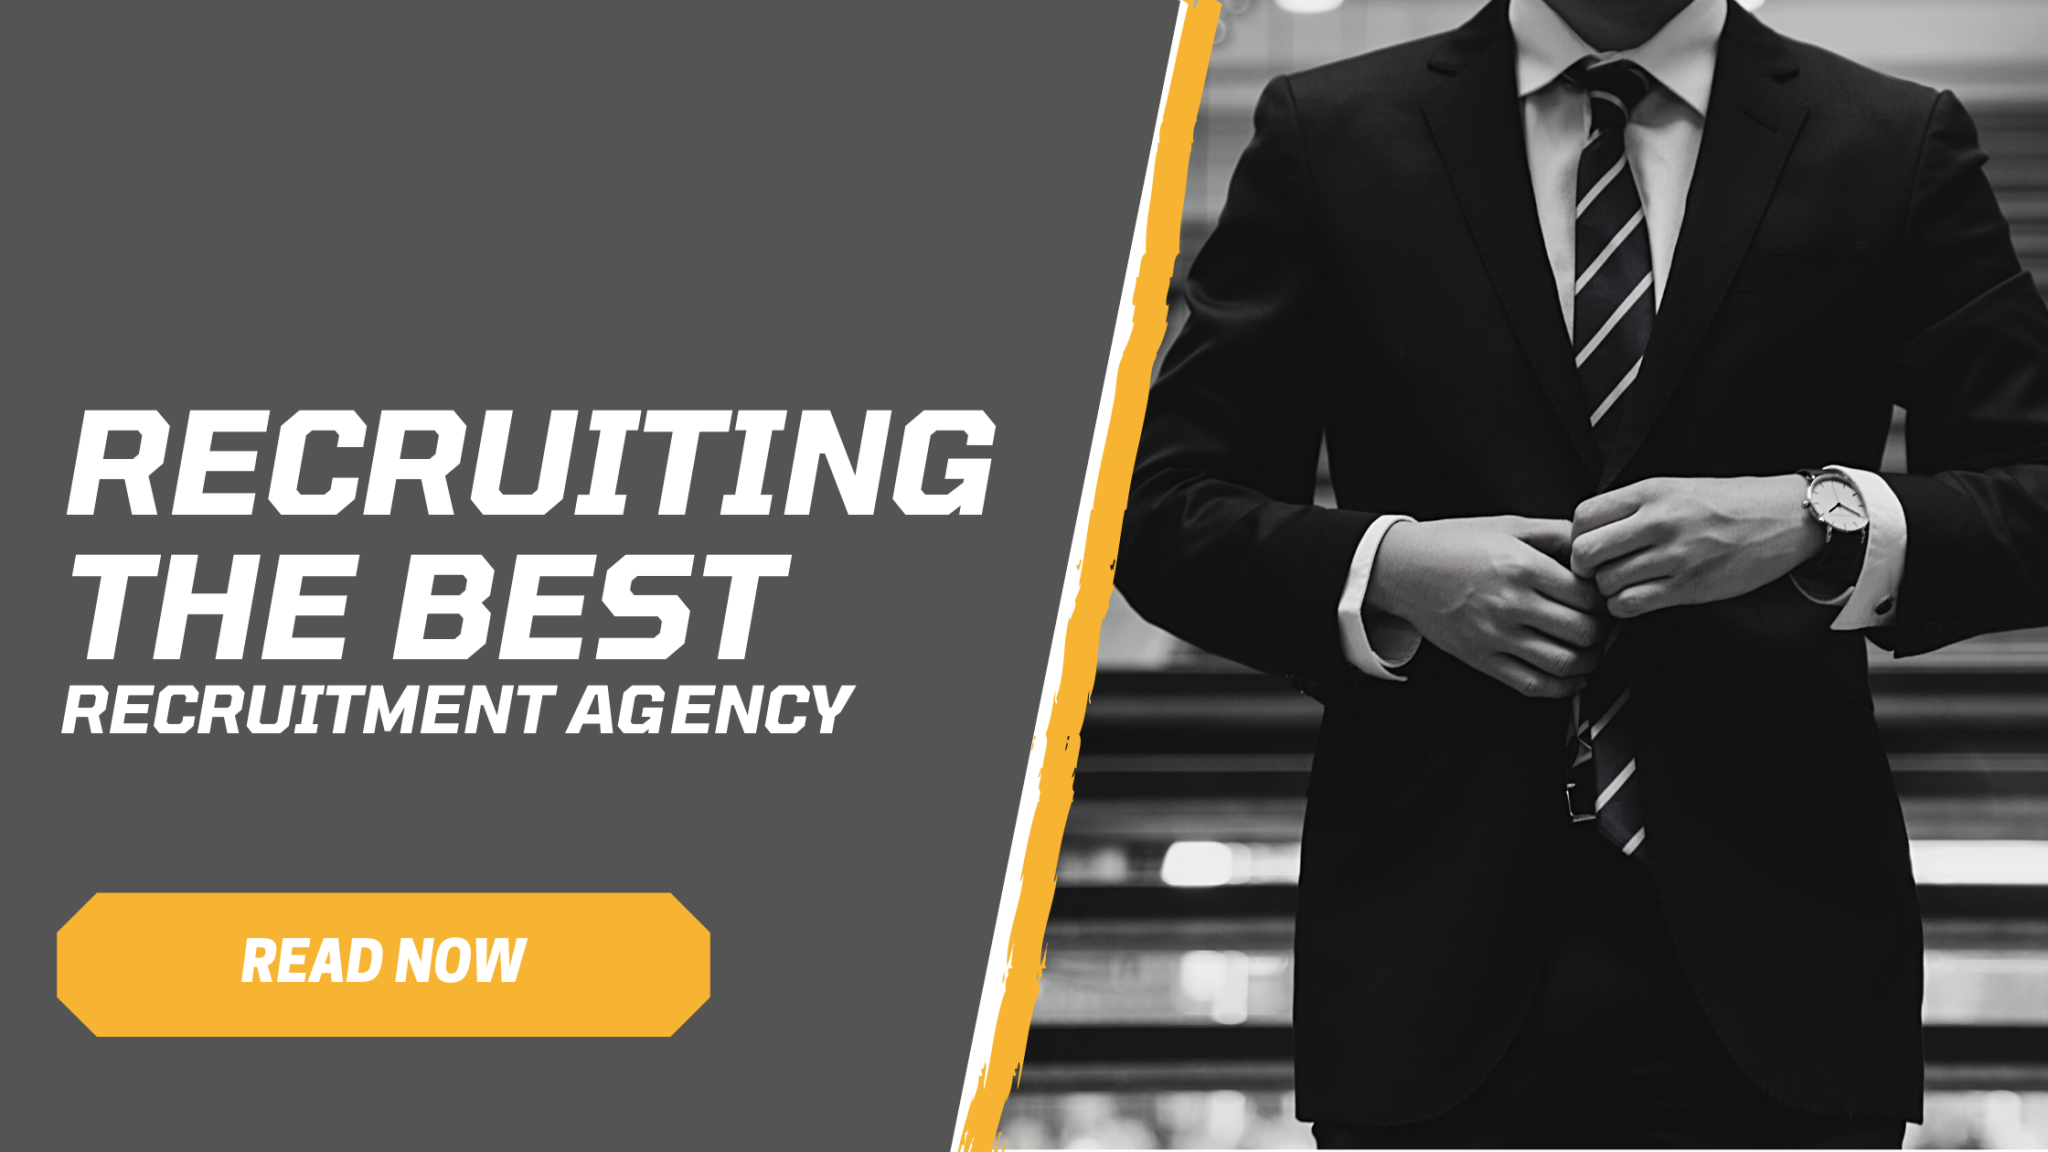 Recruiting the best recruitment agency